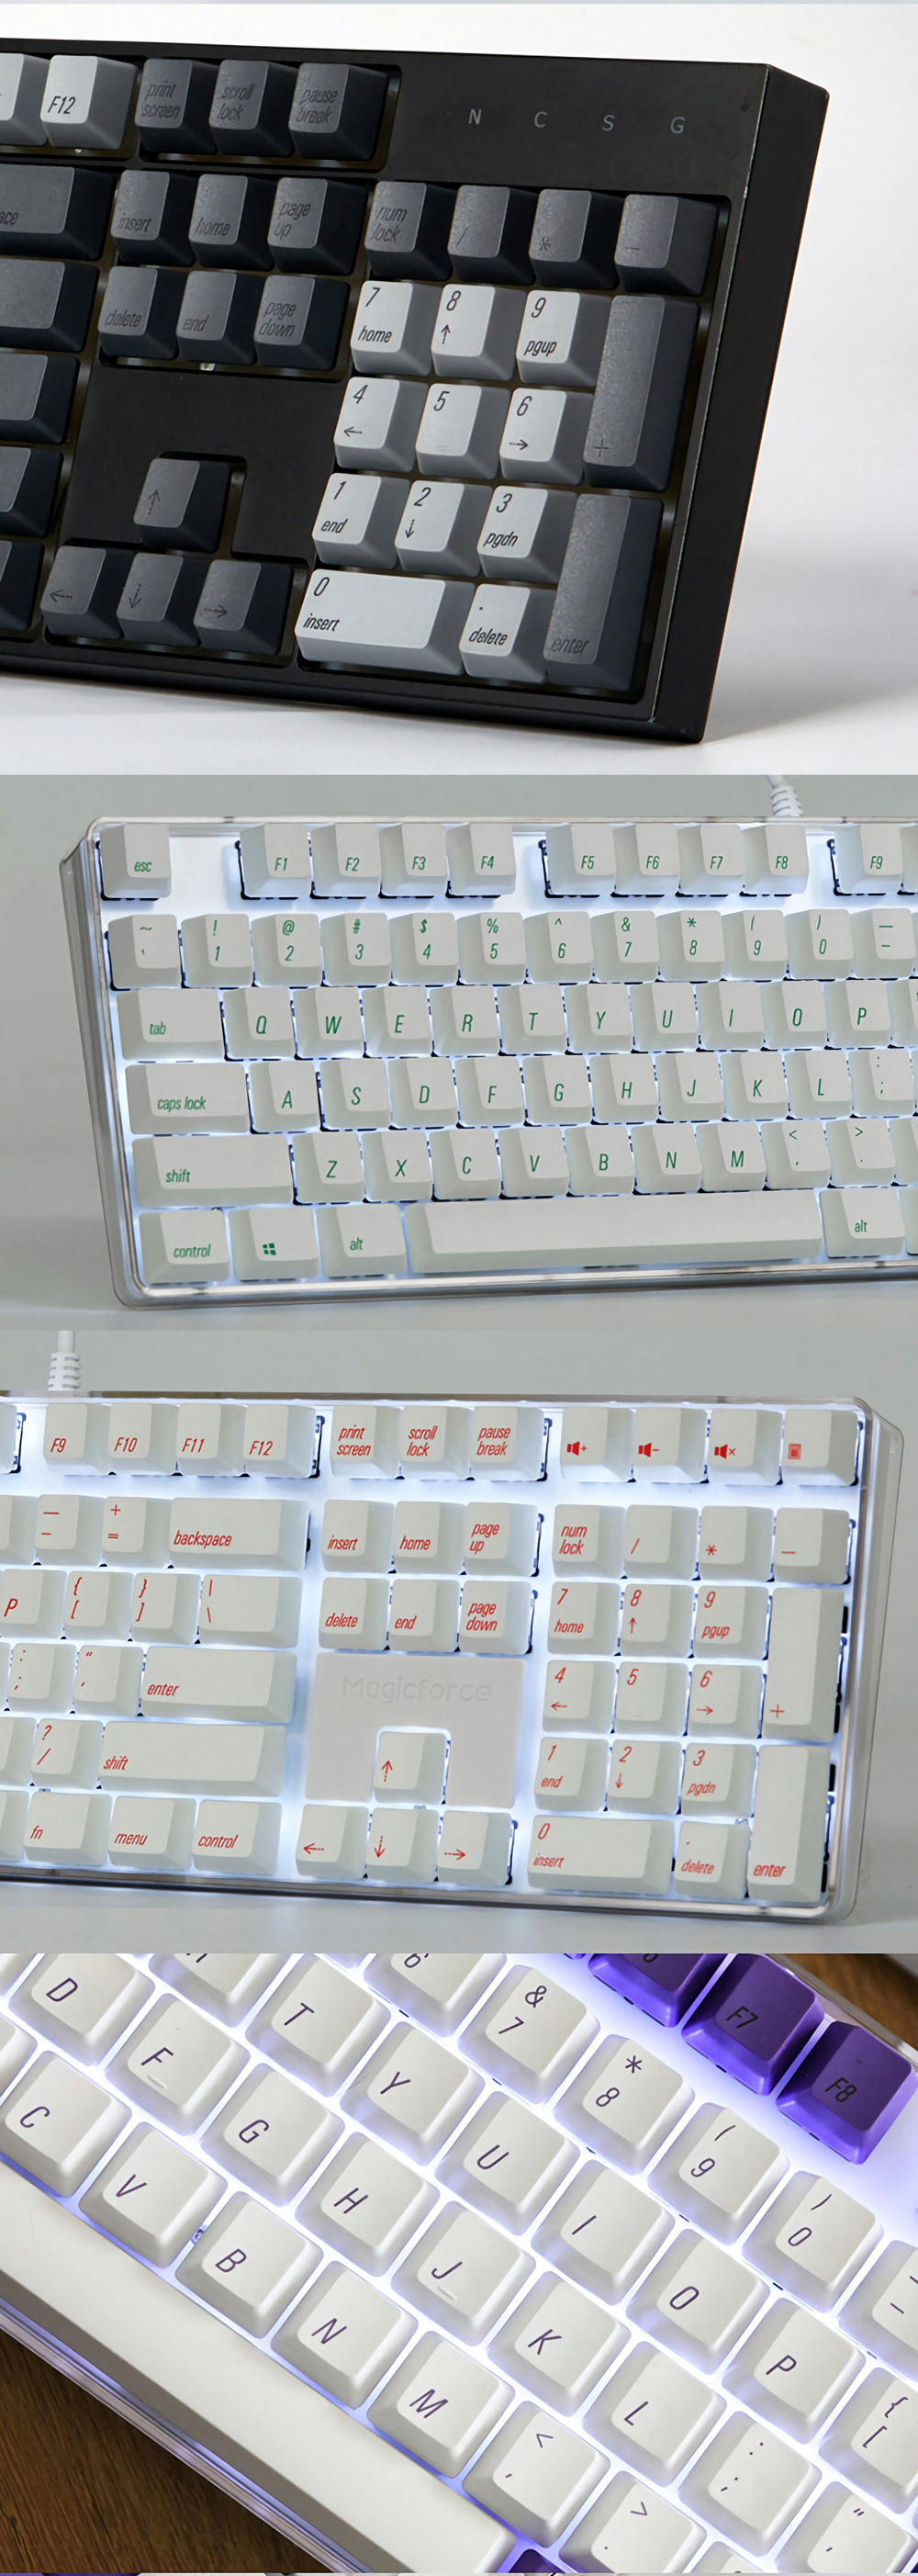 Magicforce 108 Key UV-Light Color Dye-sub PBT Keycaps Keycap Set for Mechanical Keyboard 38